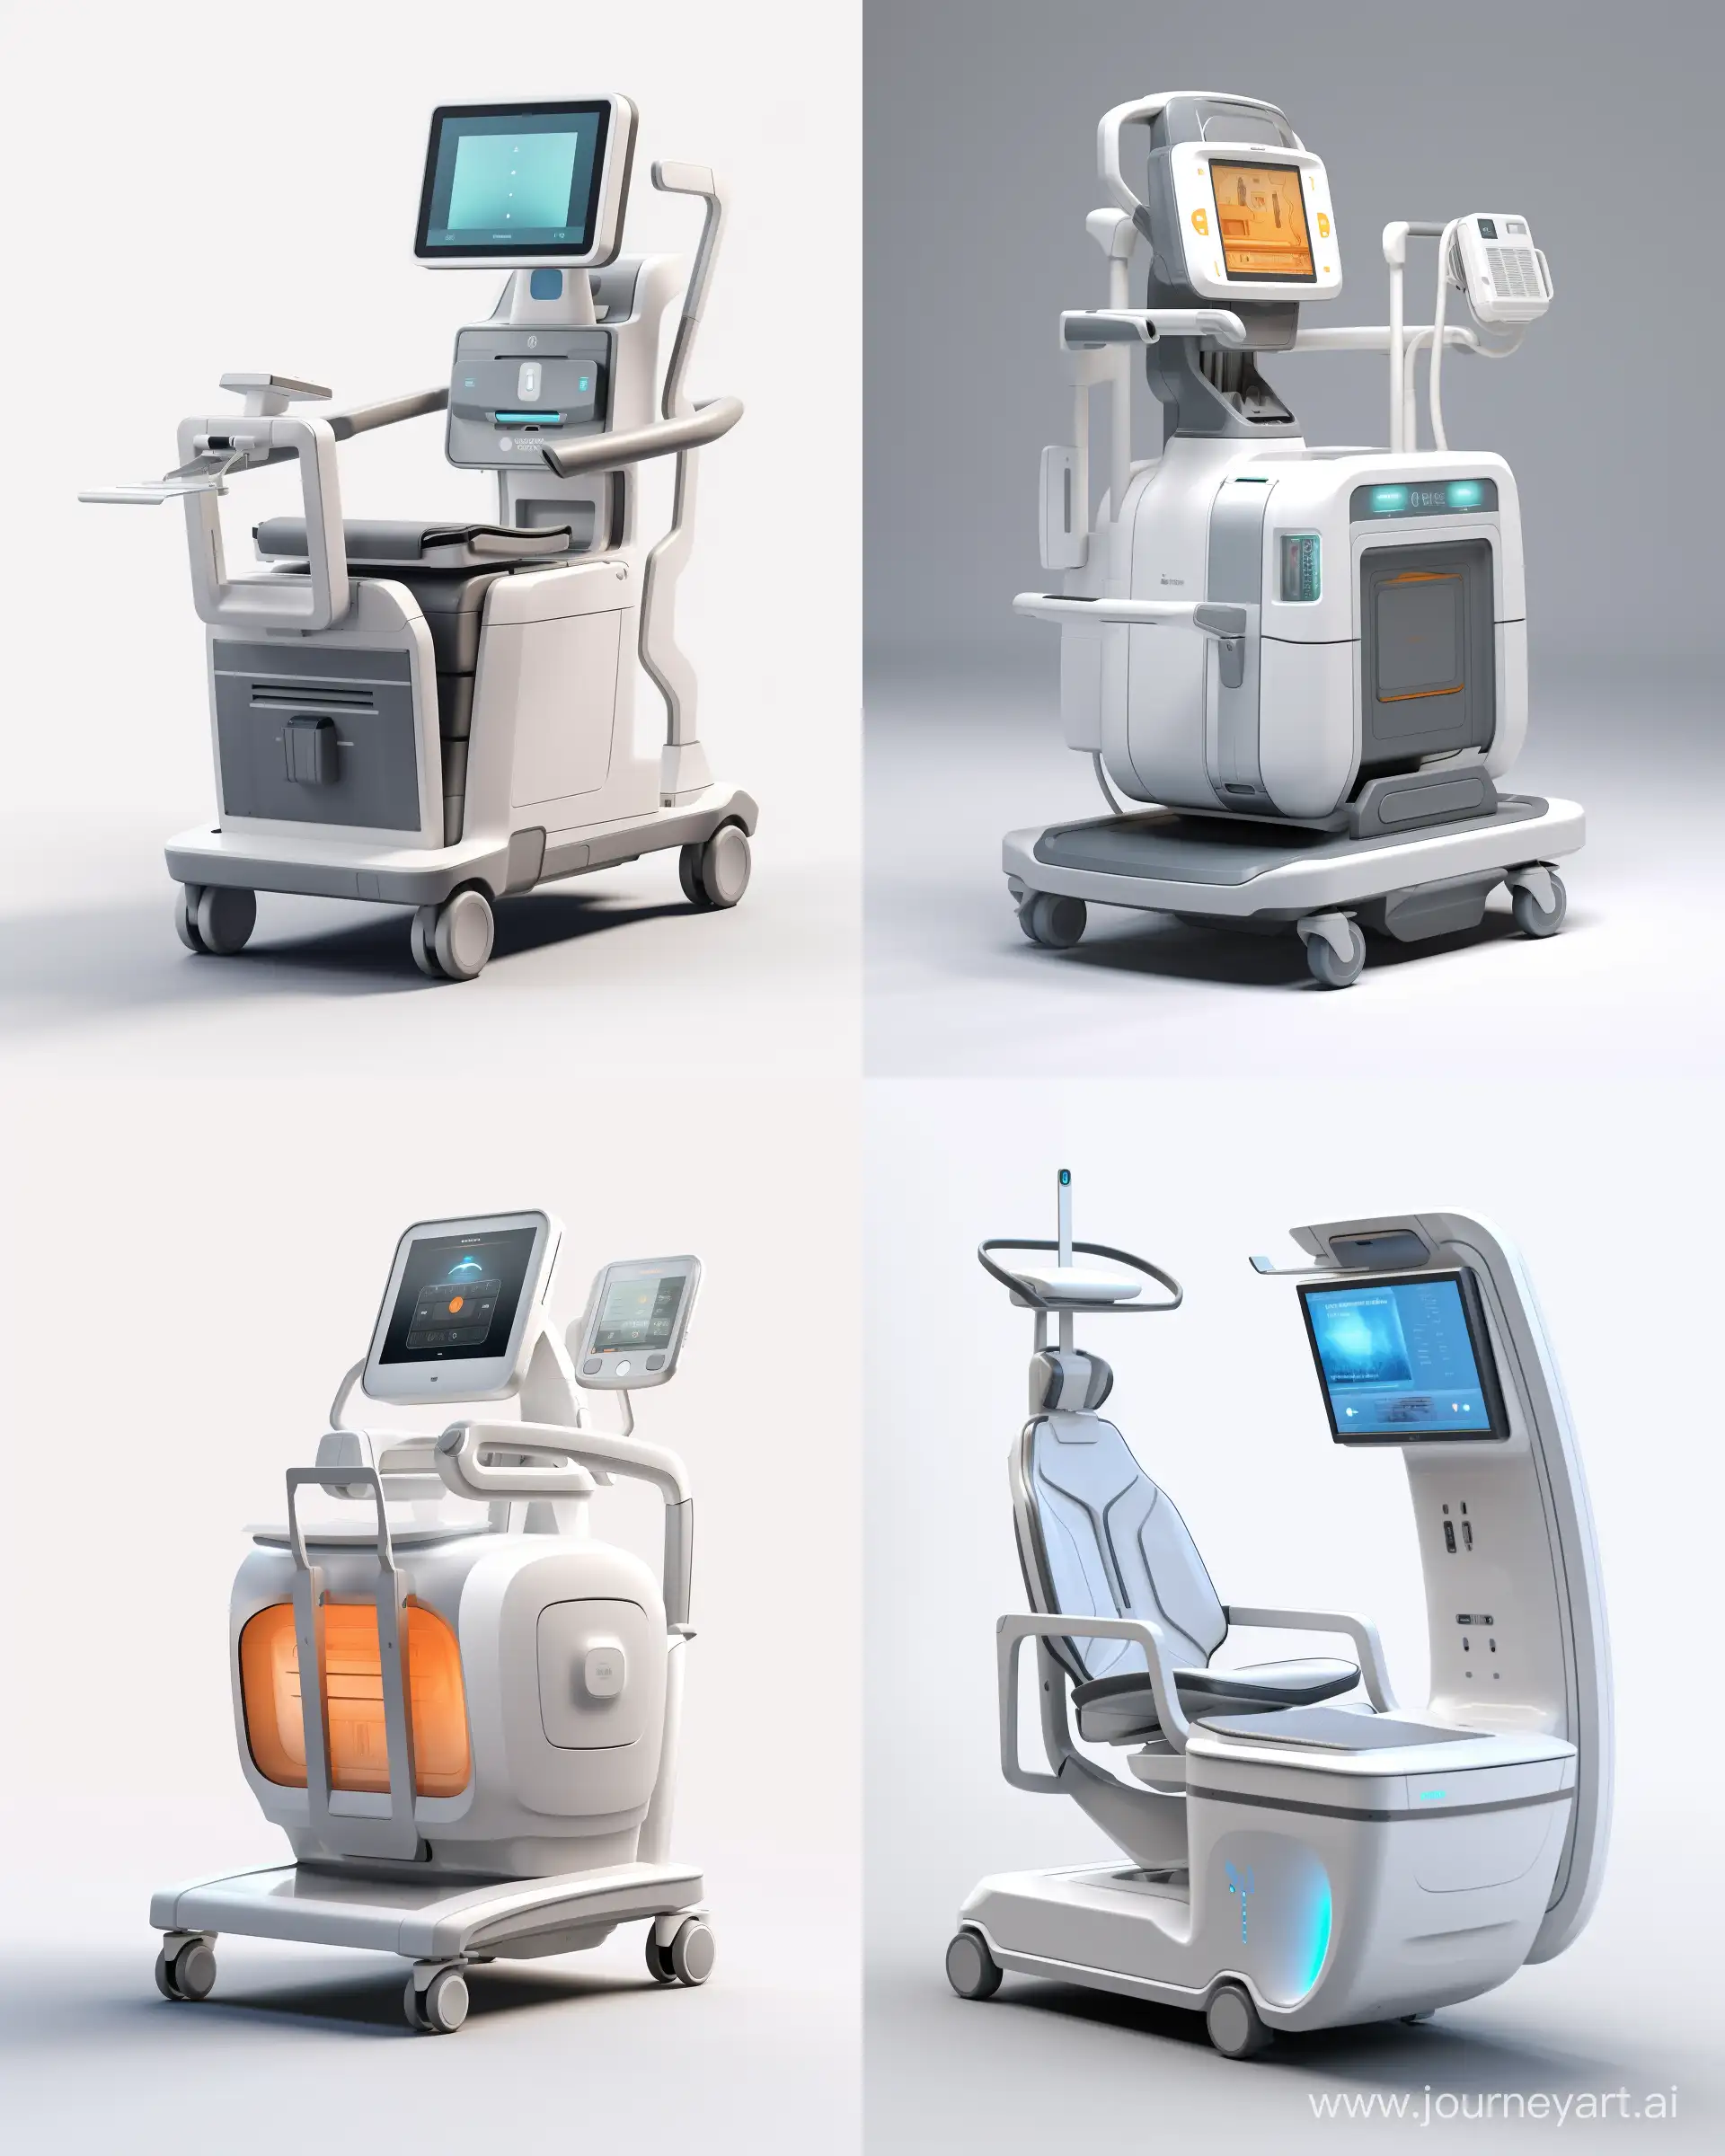 HighResolution-3D-Render-of-Luminous-Mobile-Medical-Equipment-in-White